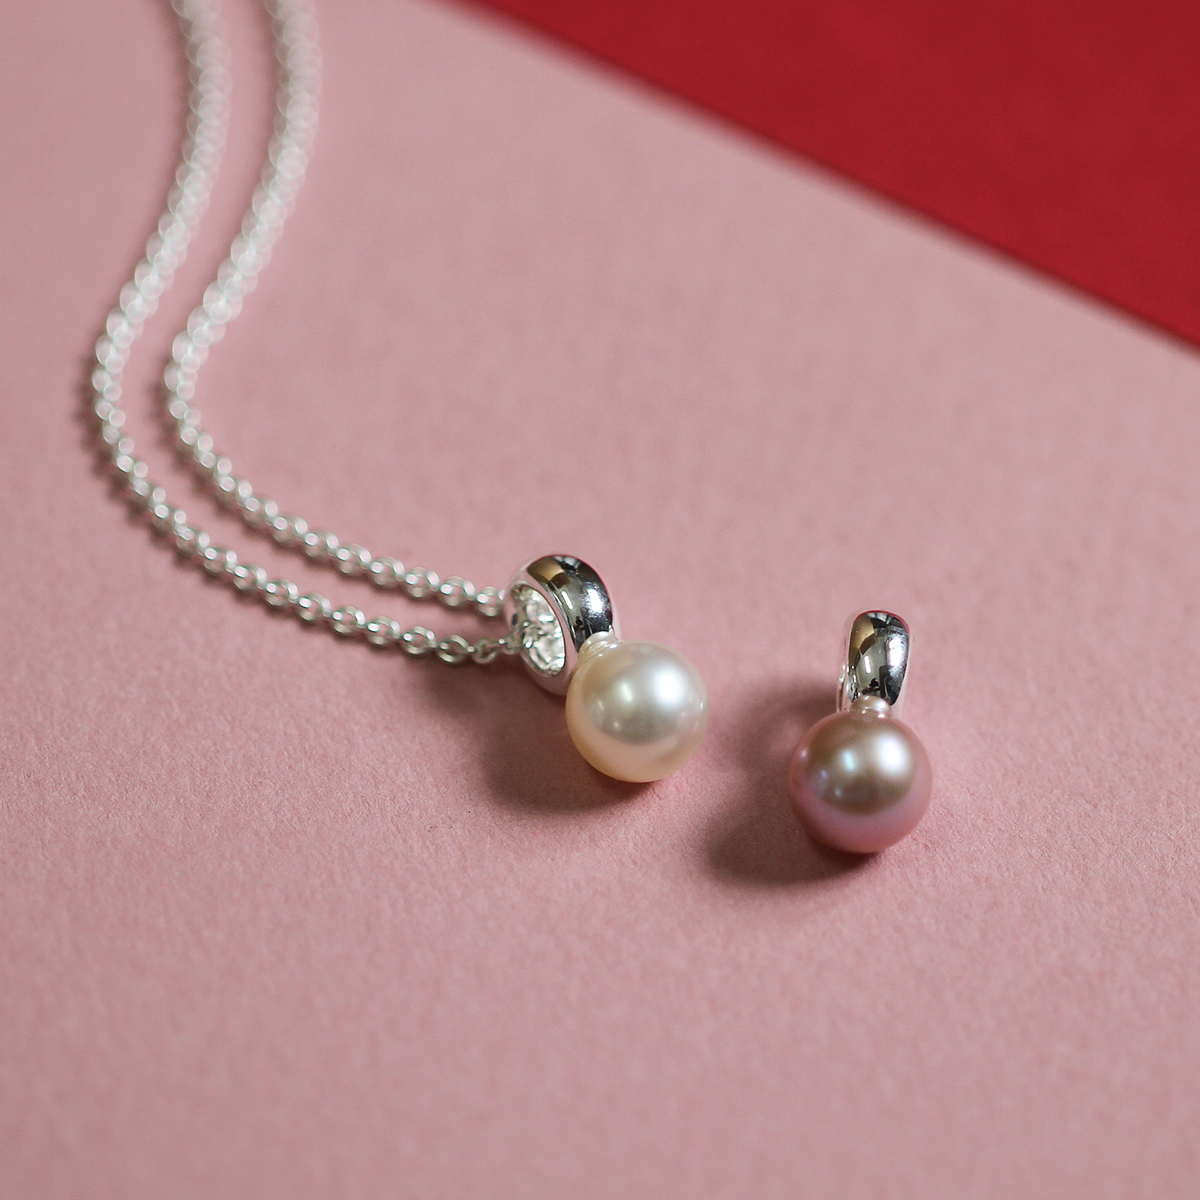 Pearl jewellery made in Mauritius